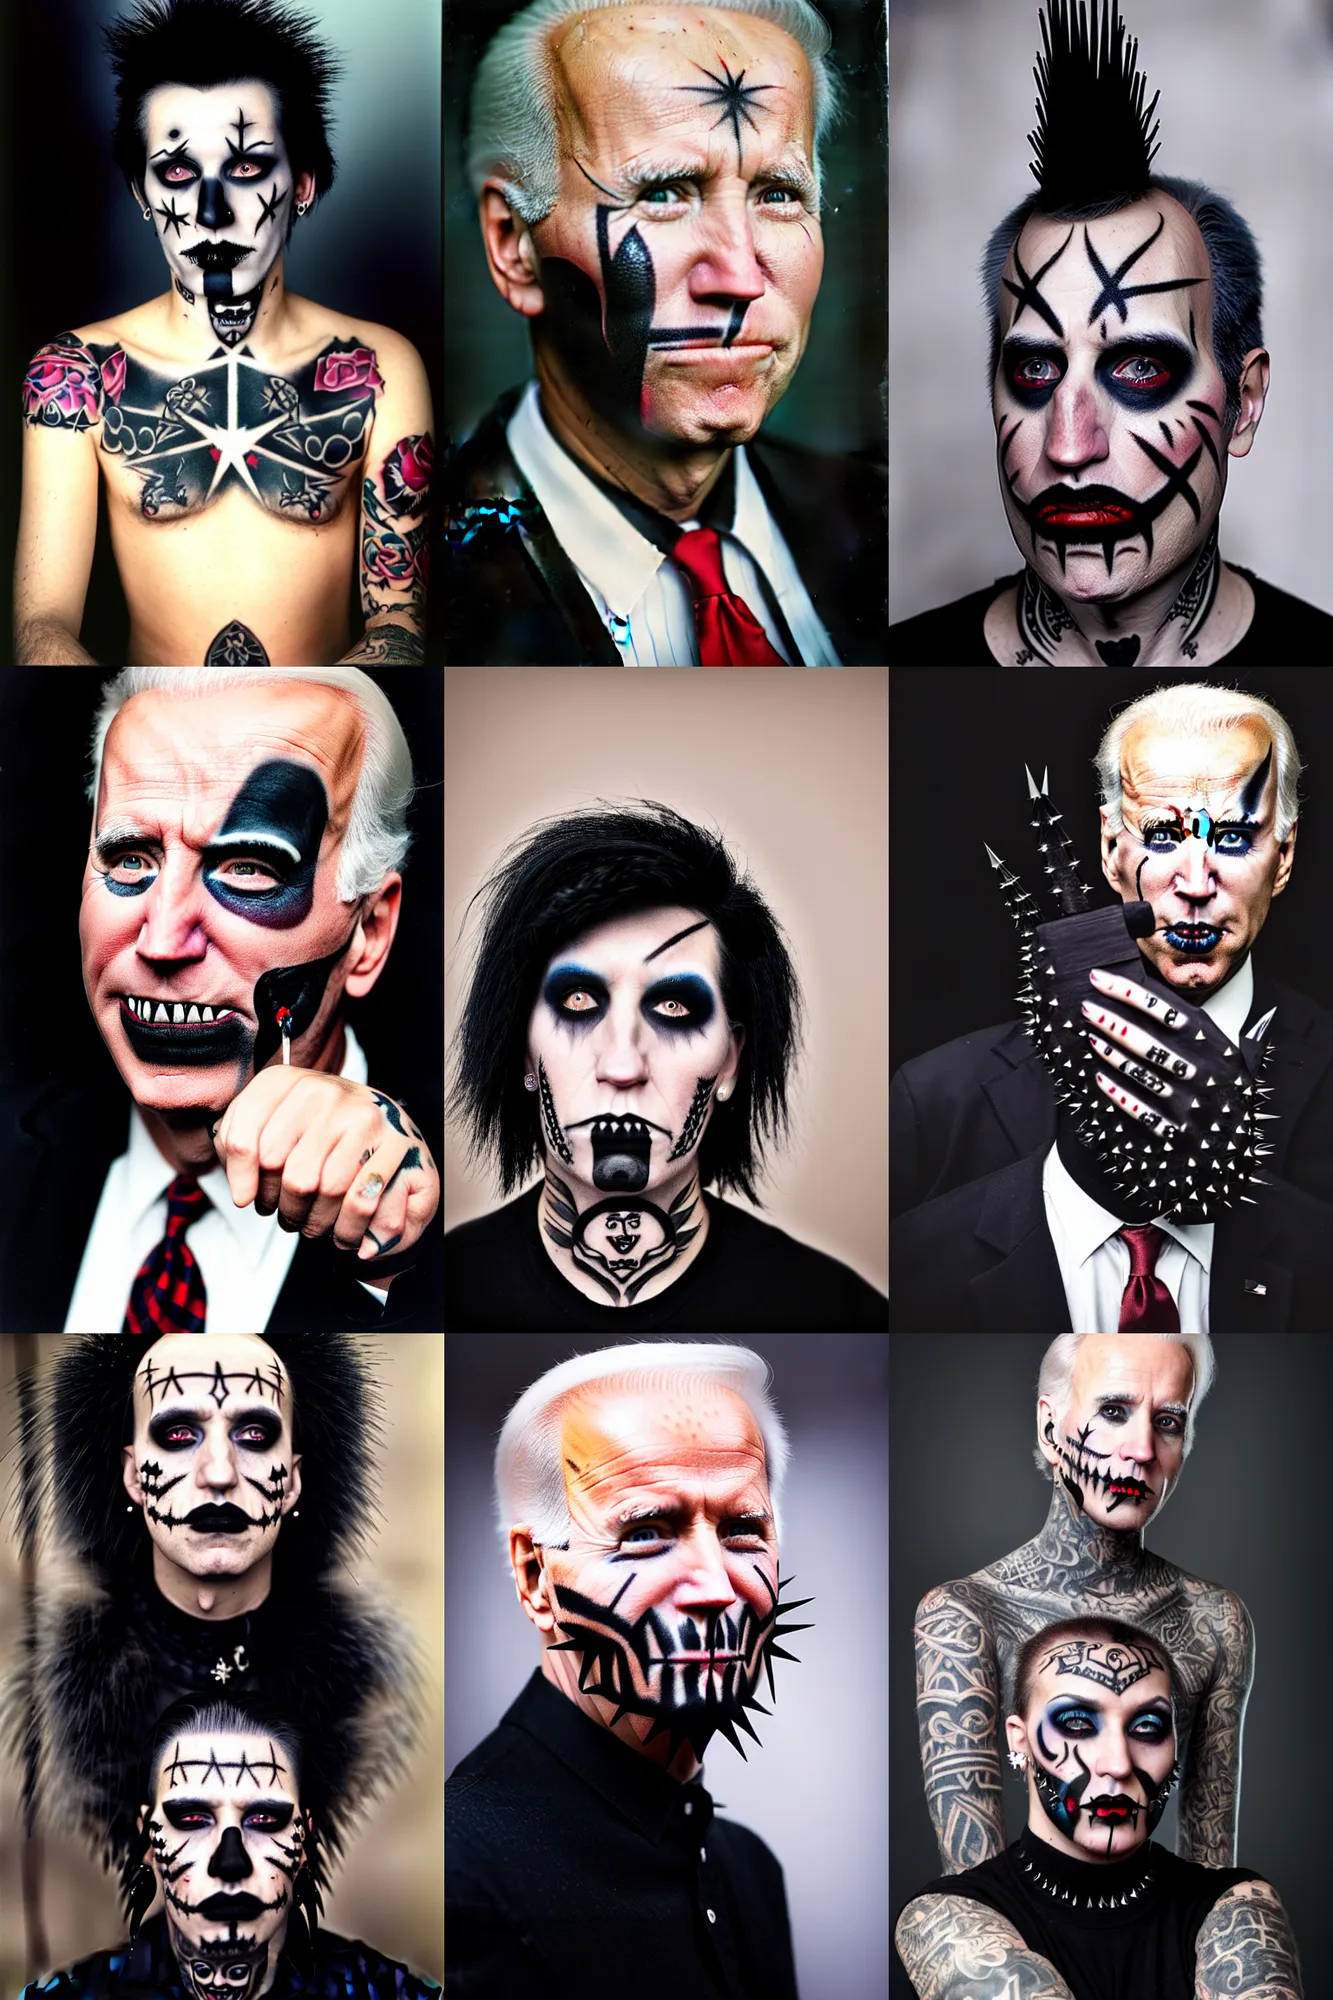 Prompt: Medium shot portrait of goth Joe Biden with makeup, facial tattoos, piercings, jet black spiky hair, sneering at the camera, F 1.8, Kodachrome